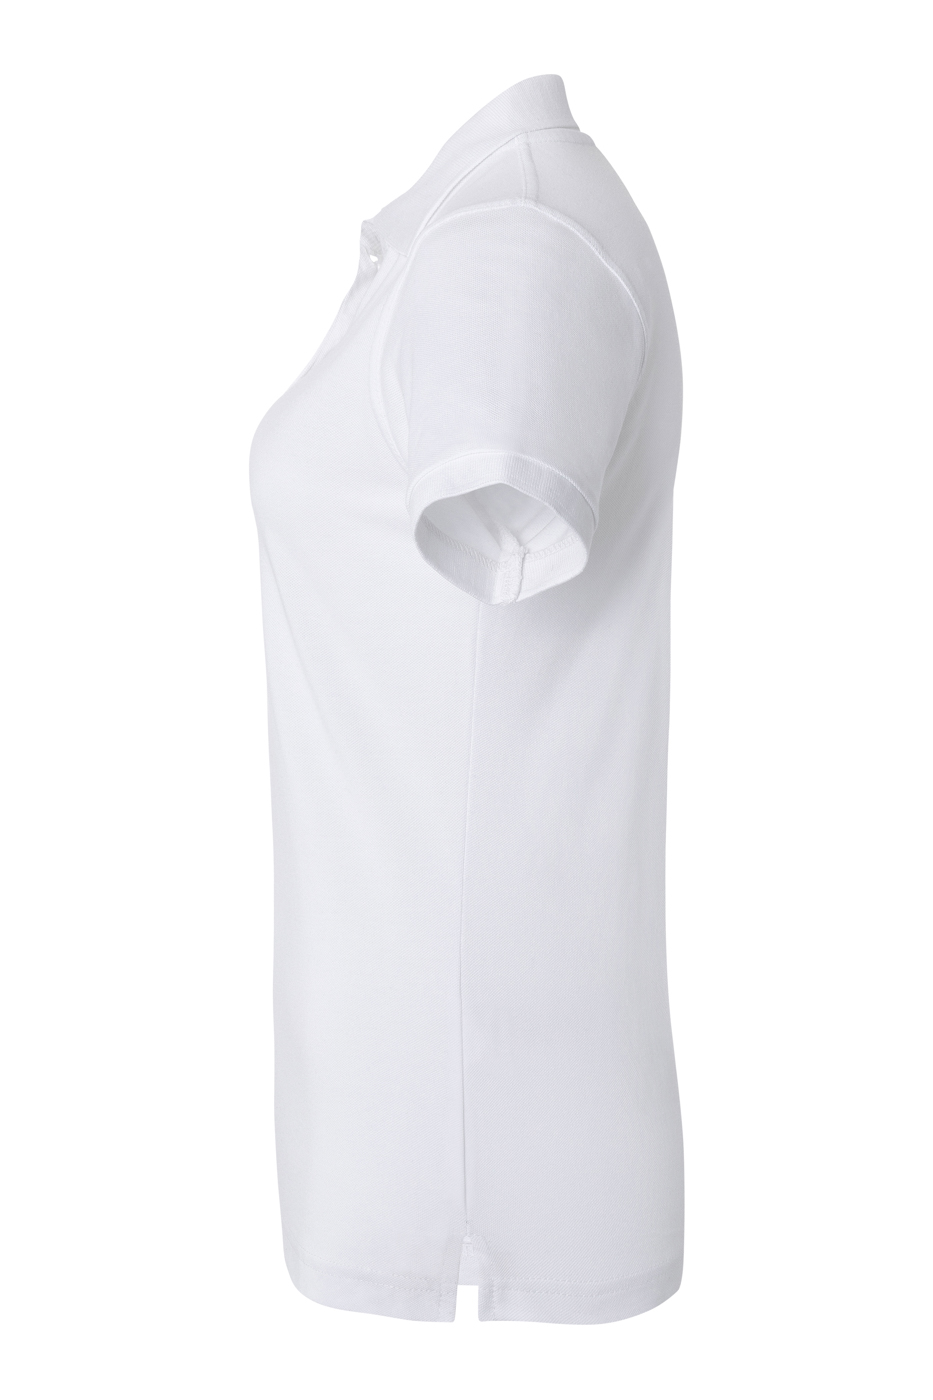 Damen Workwear Poloshirt Basic - Größe: XL